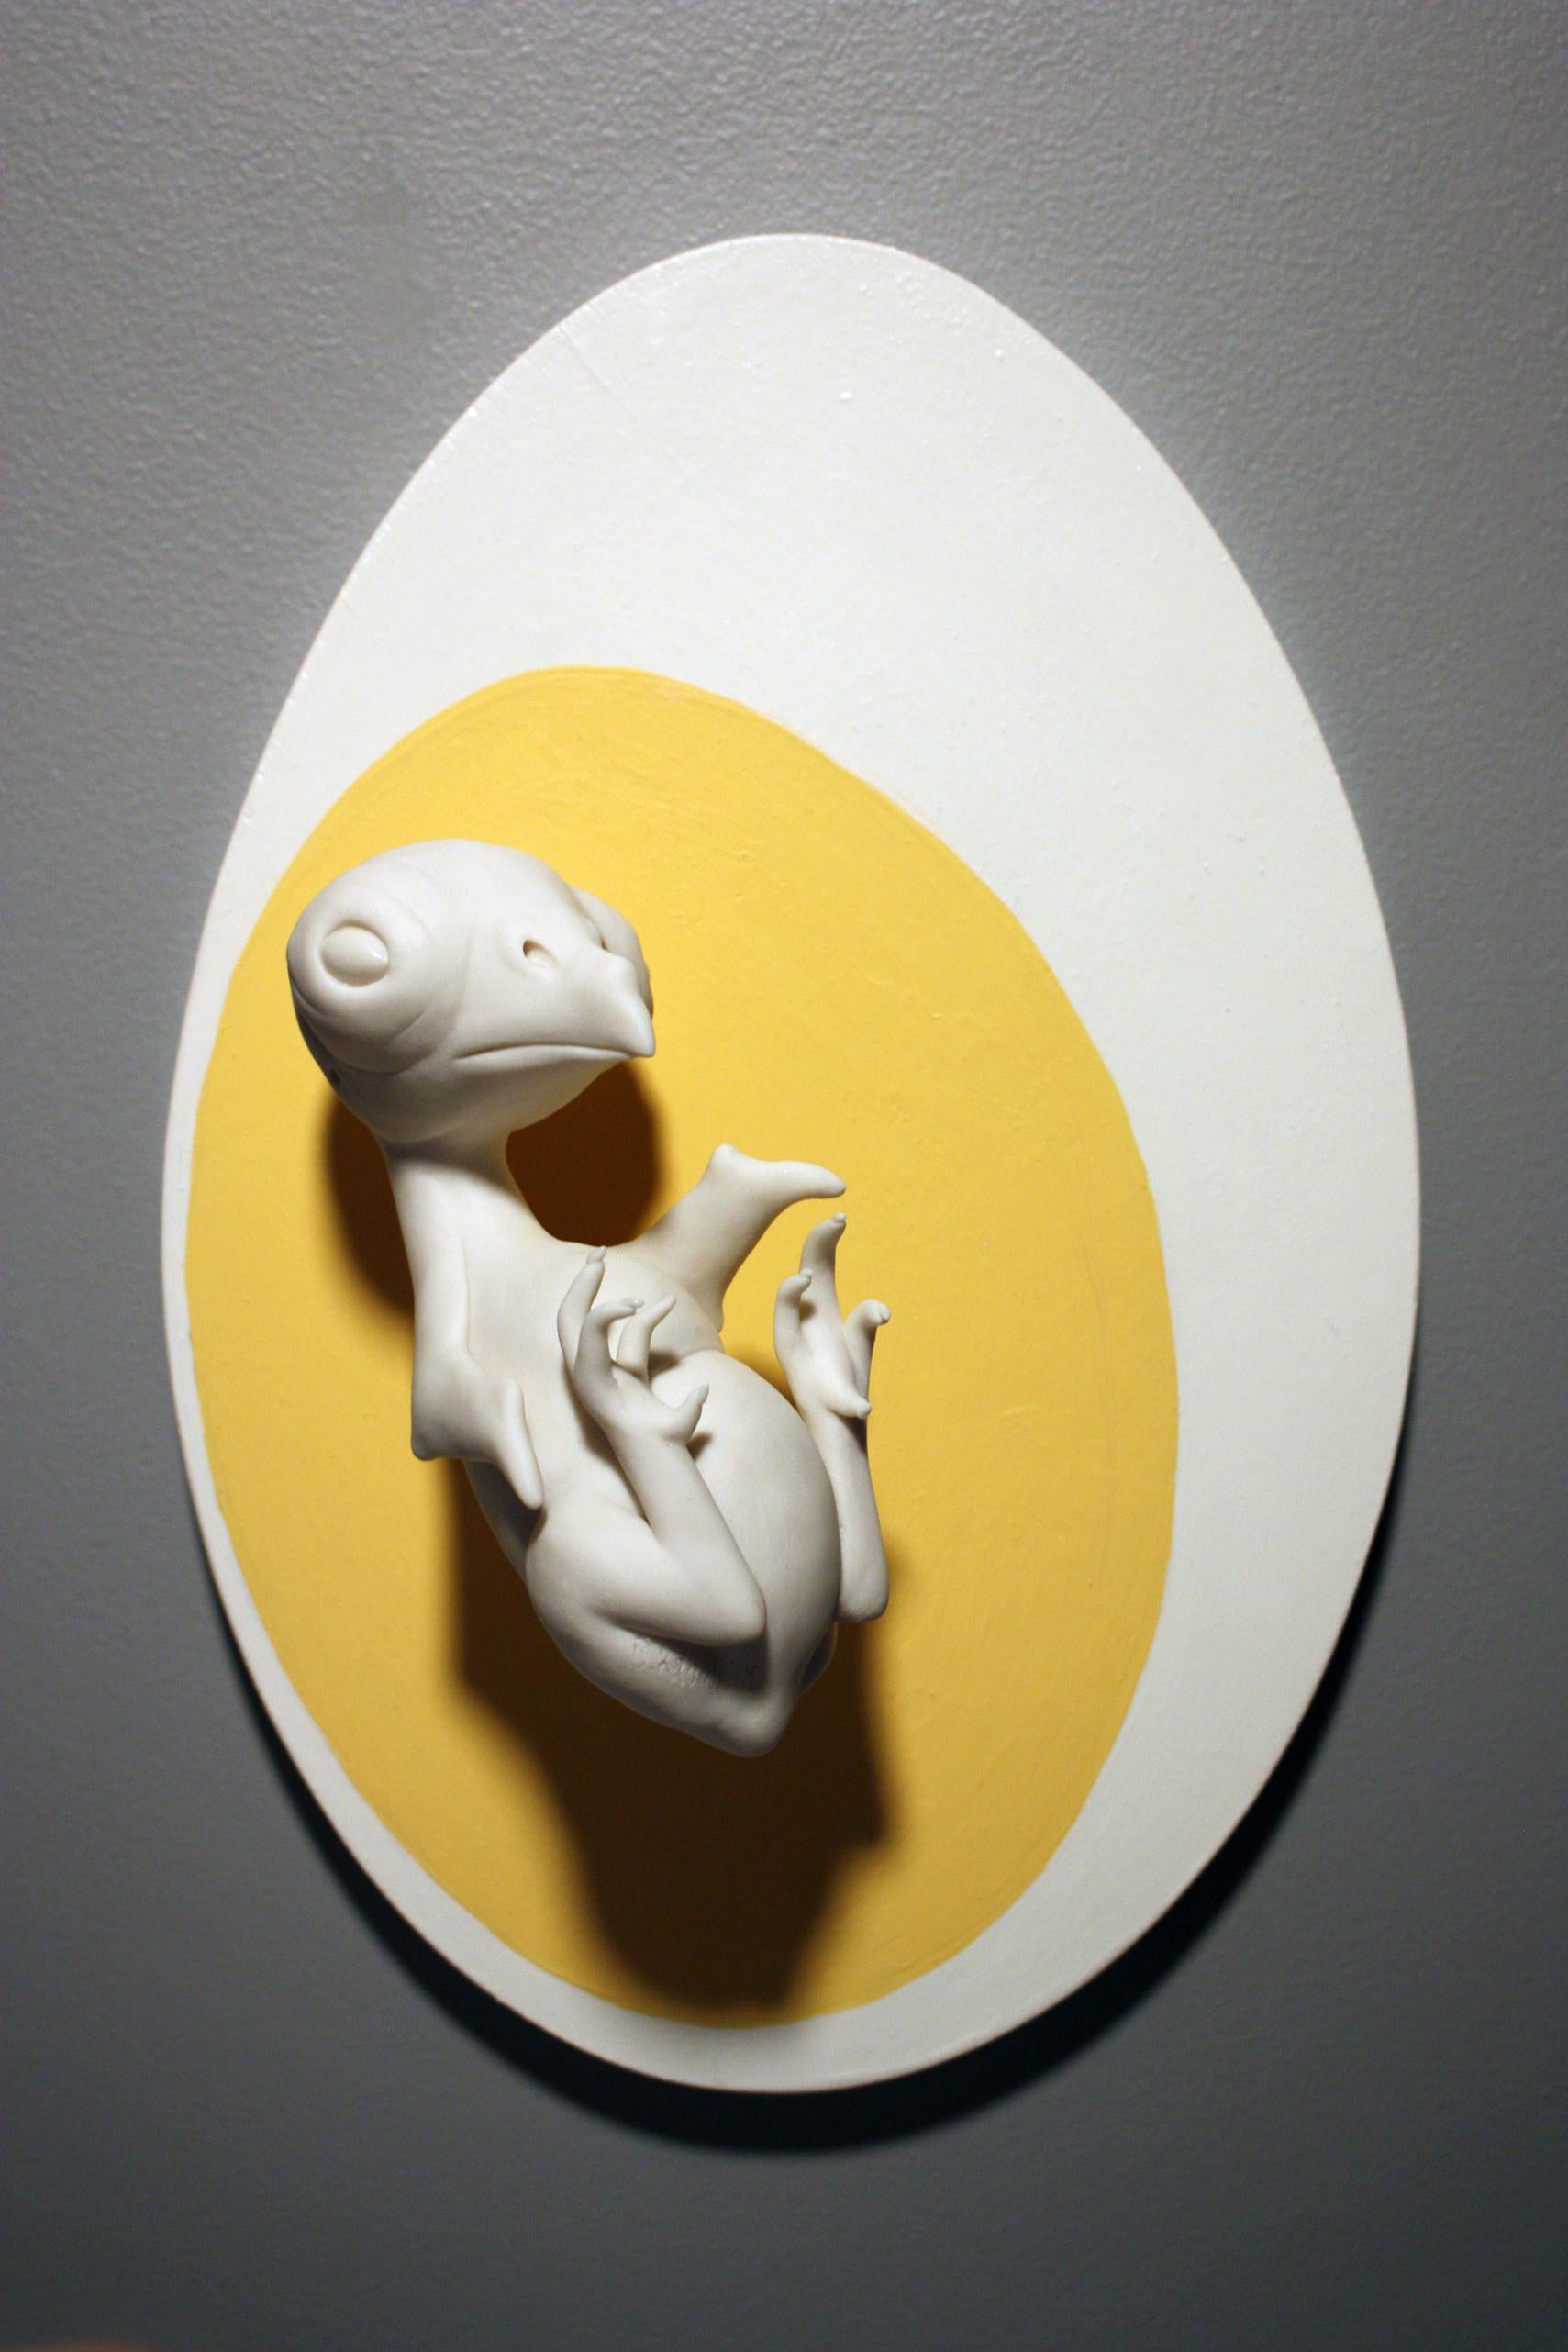 White Porcelain Bird Inside Egg, Wall Sculpture "Hatch" by Bethany Krull 